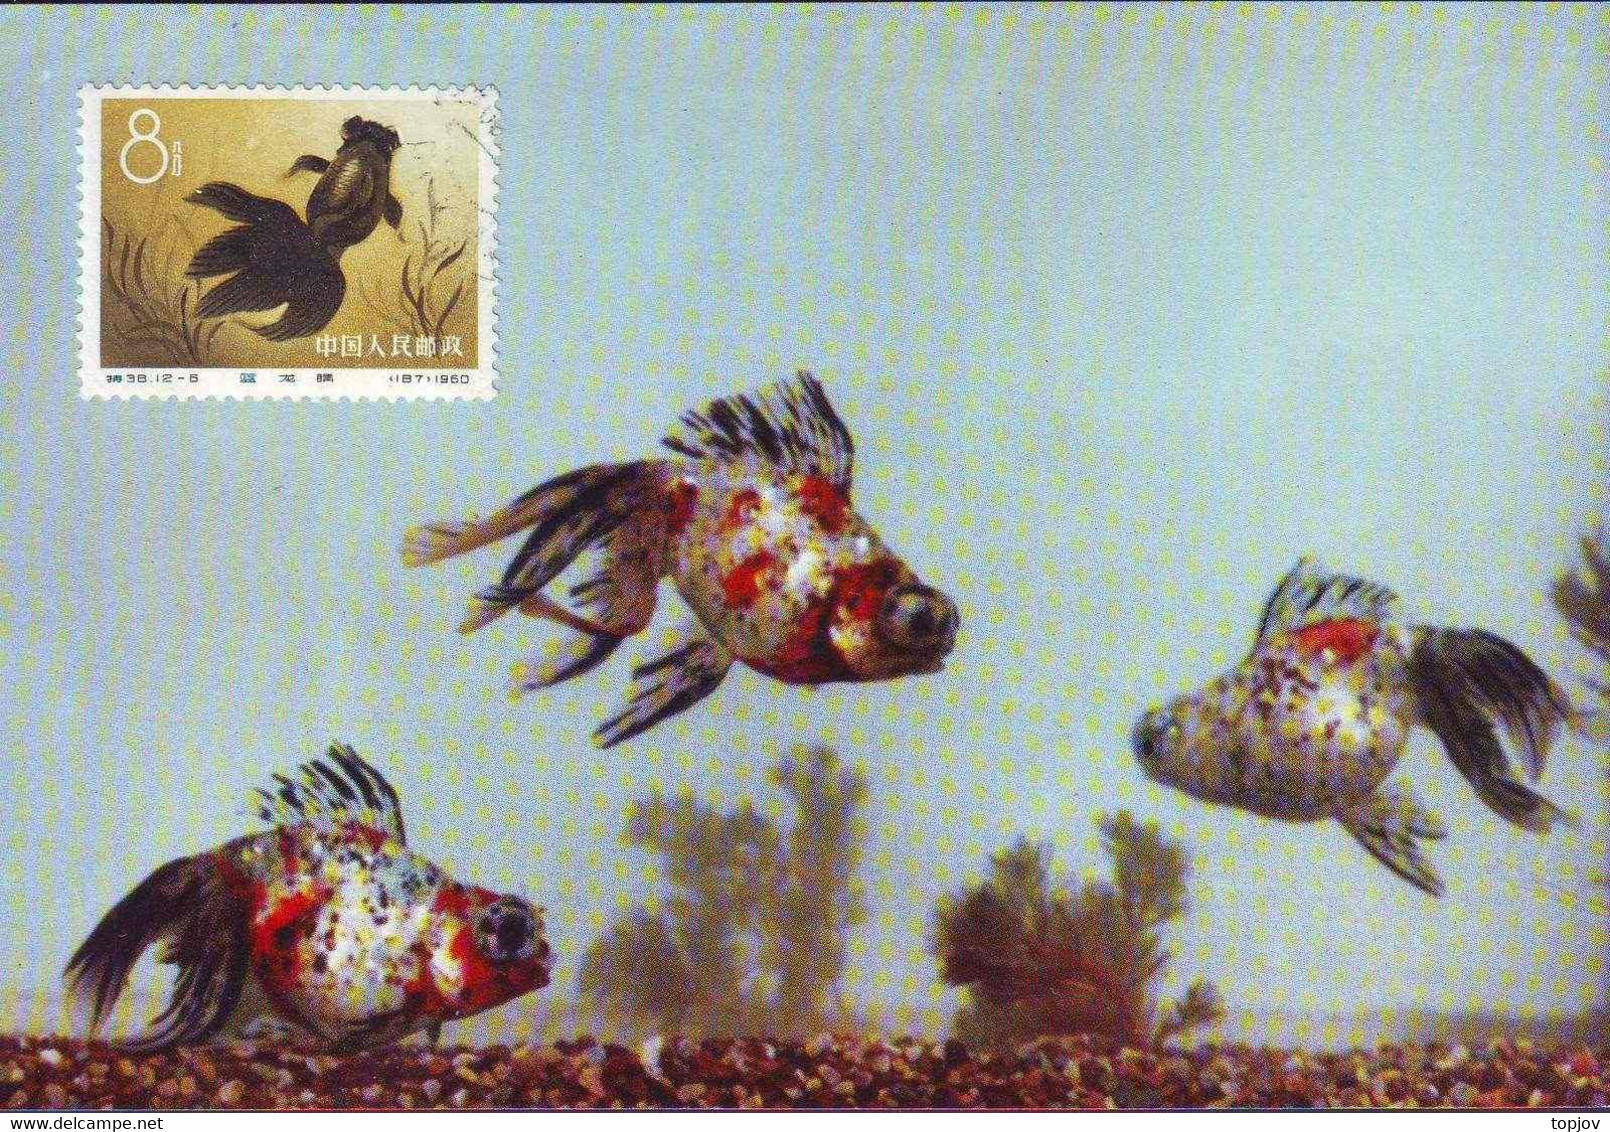 CHINA - KINA -  GOLD  FISH  on  POSTCARDS - complet set 12 v -  ORGINAL  CARD - cto  MC - 1960 - PERFECT - RARE